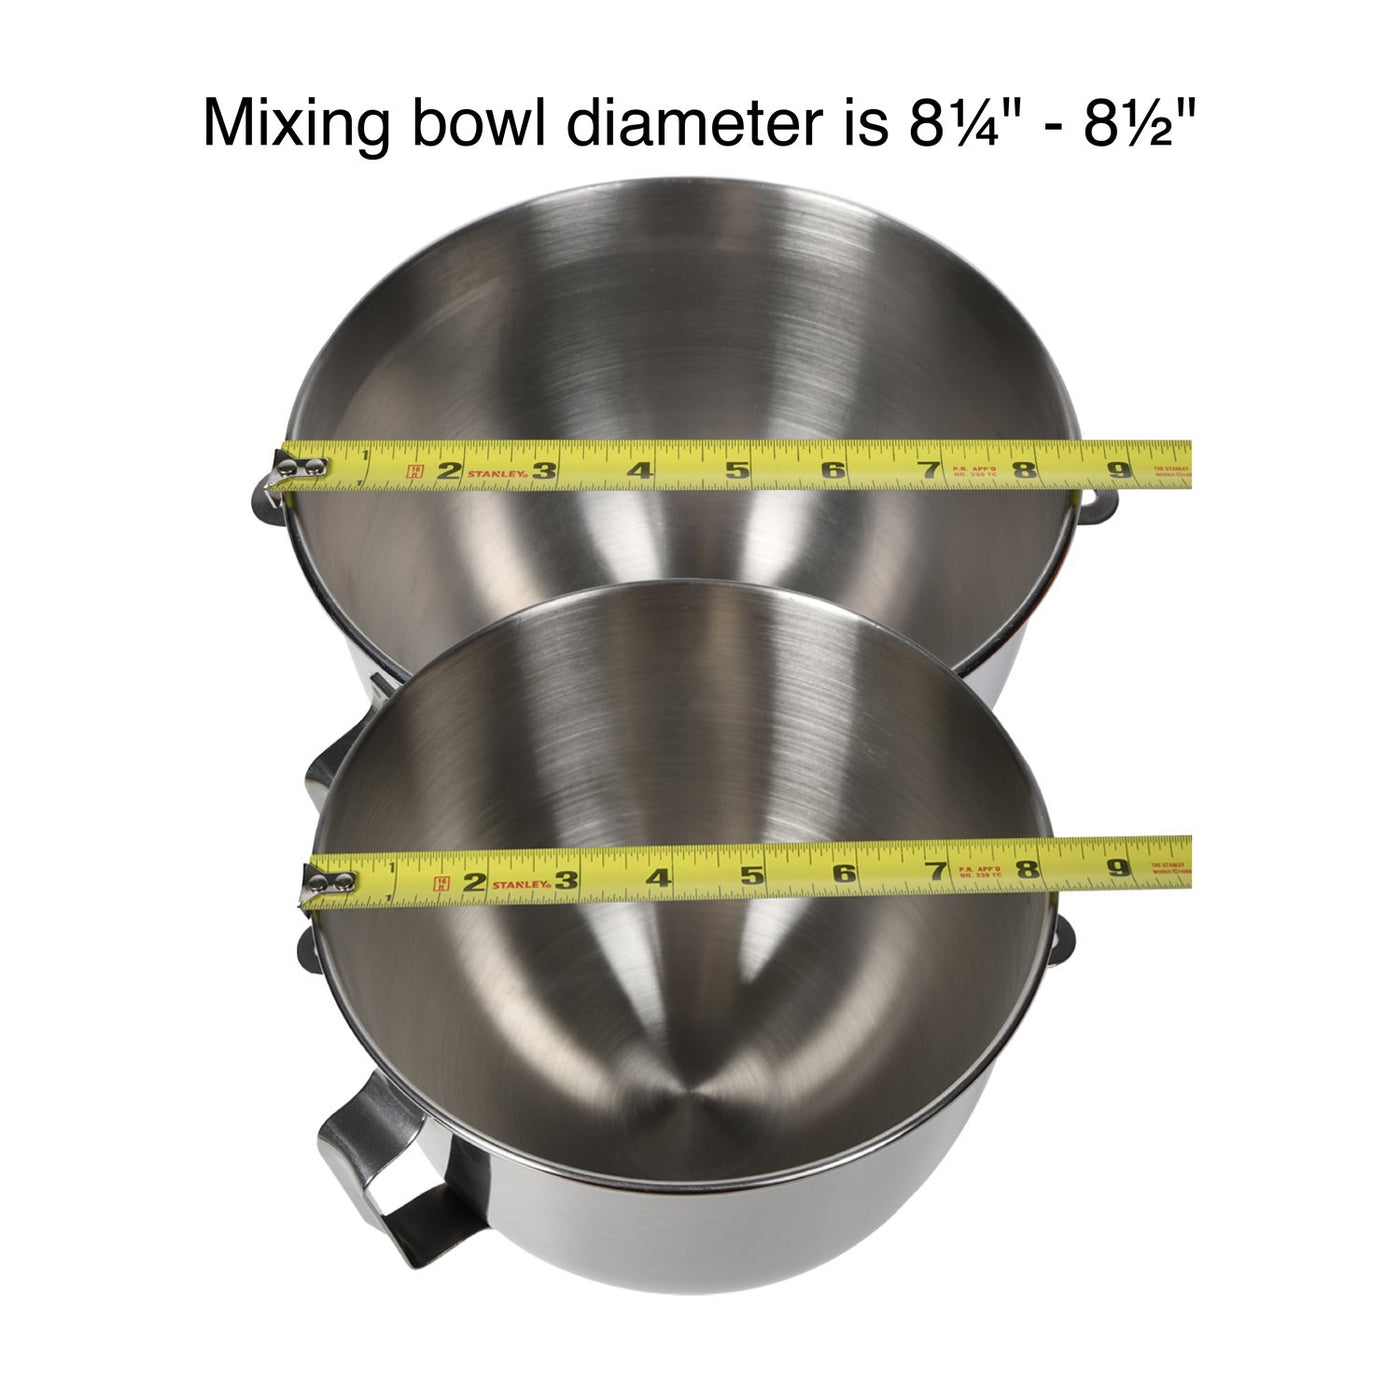 Original BeaterBlade for KitchenAid 6-Quart Bowl Lift Mixer, KA-6L